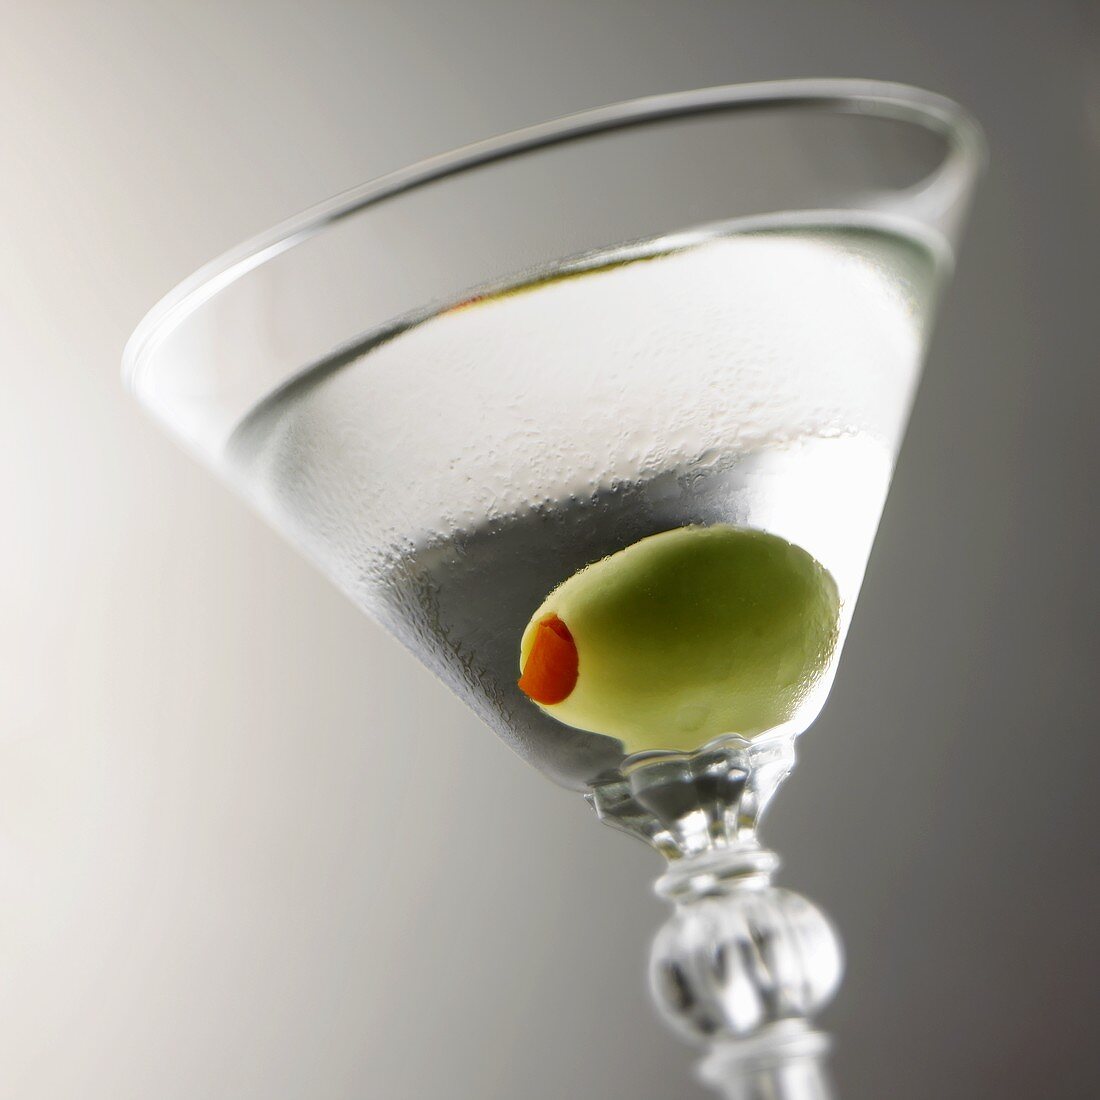 A Classic Martini